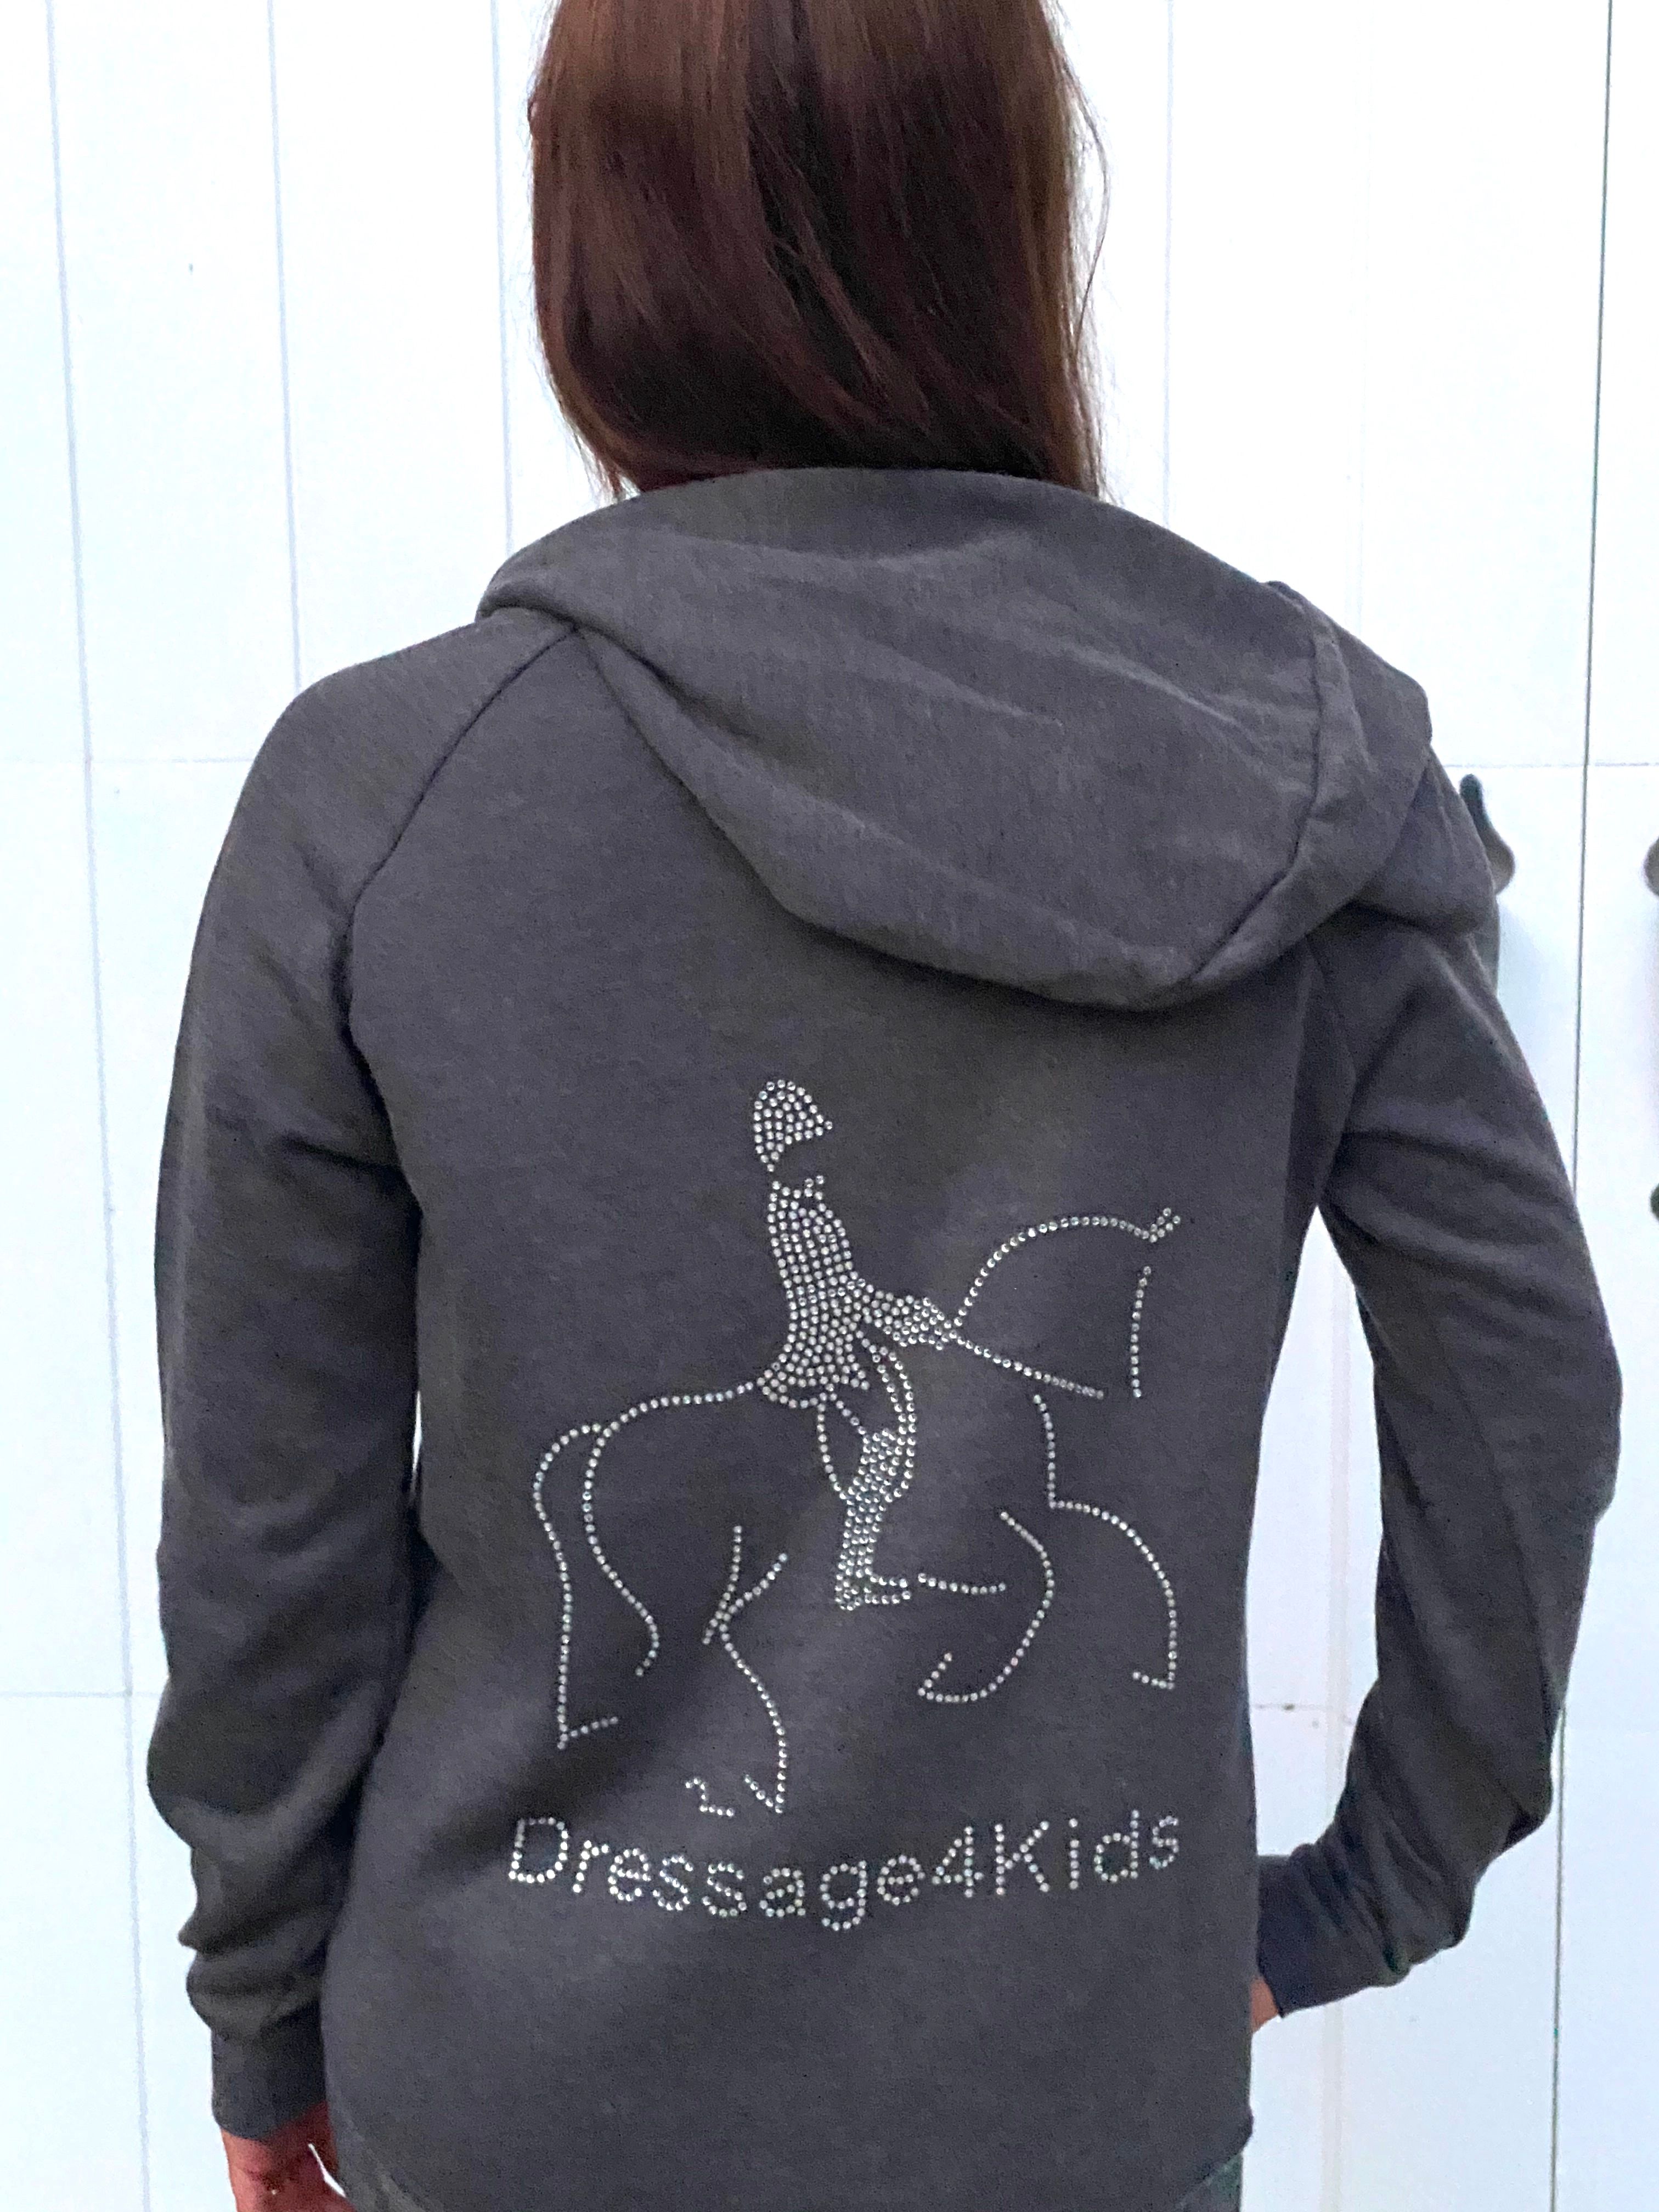 D4K Sparkle Sweatshirt Pullover - $39 - Click for details